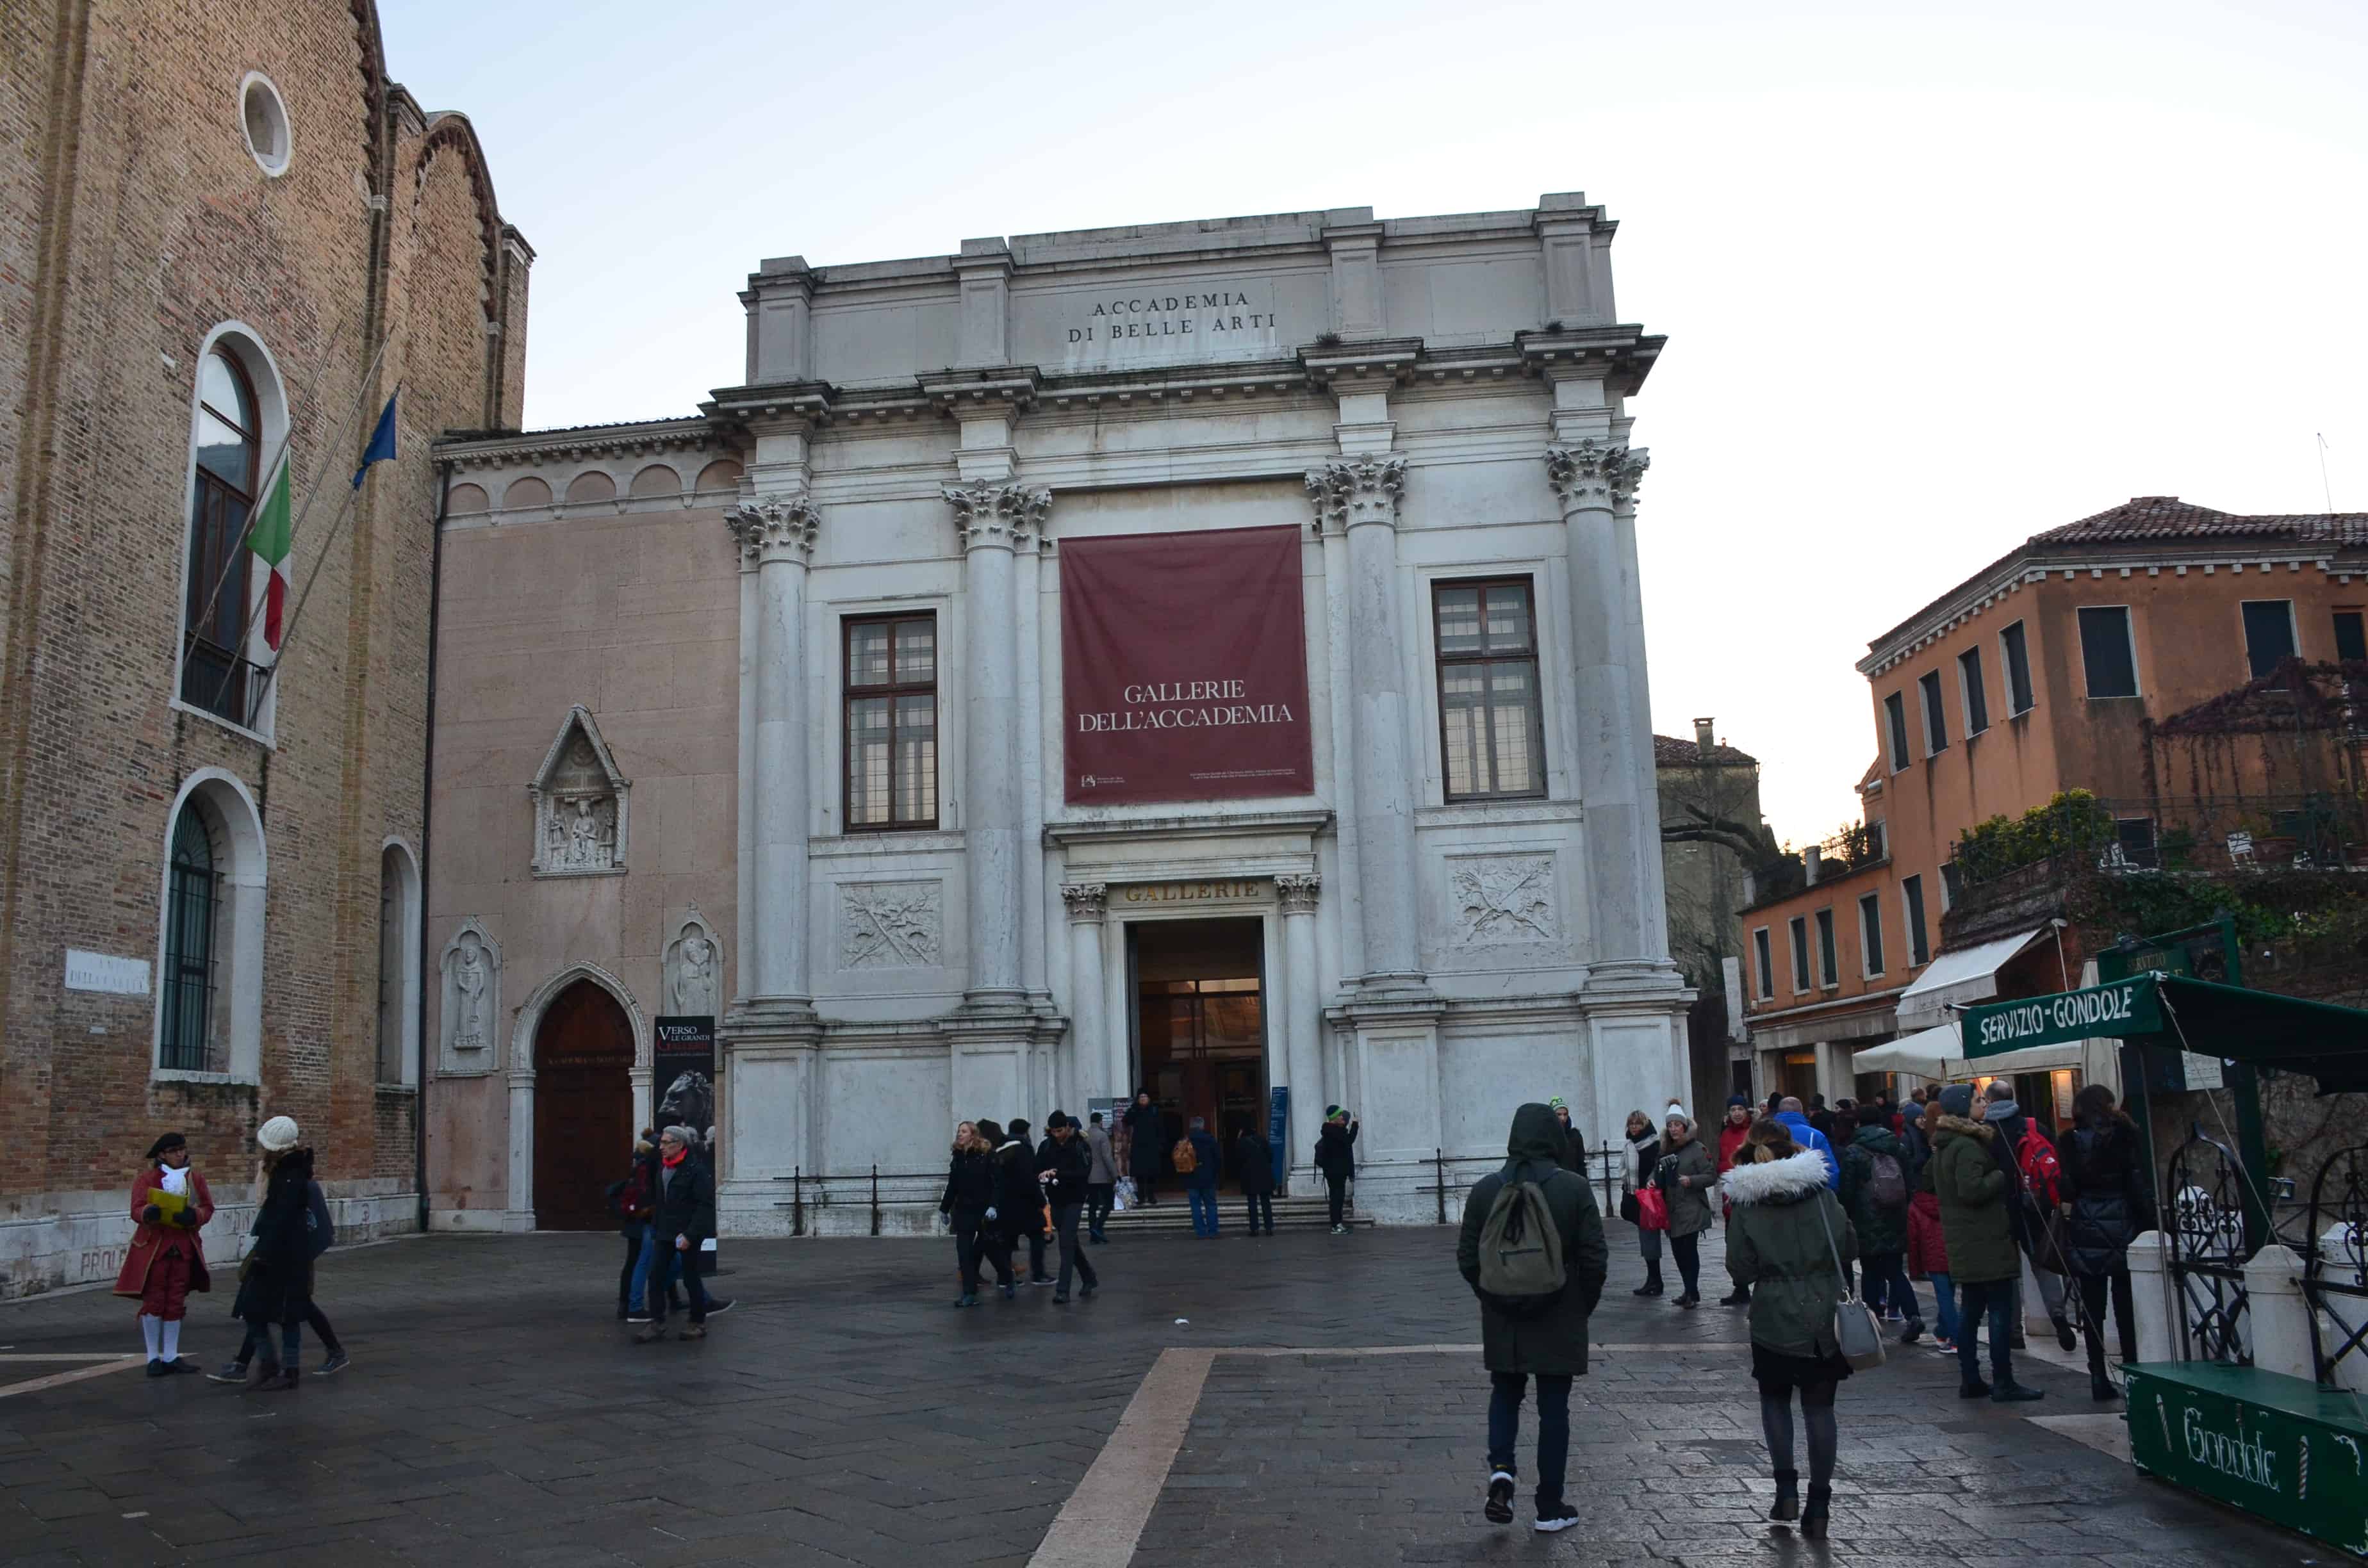 Gallerie dell'Accademia in Venice, Italy